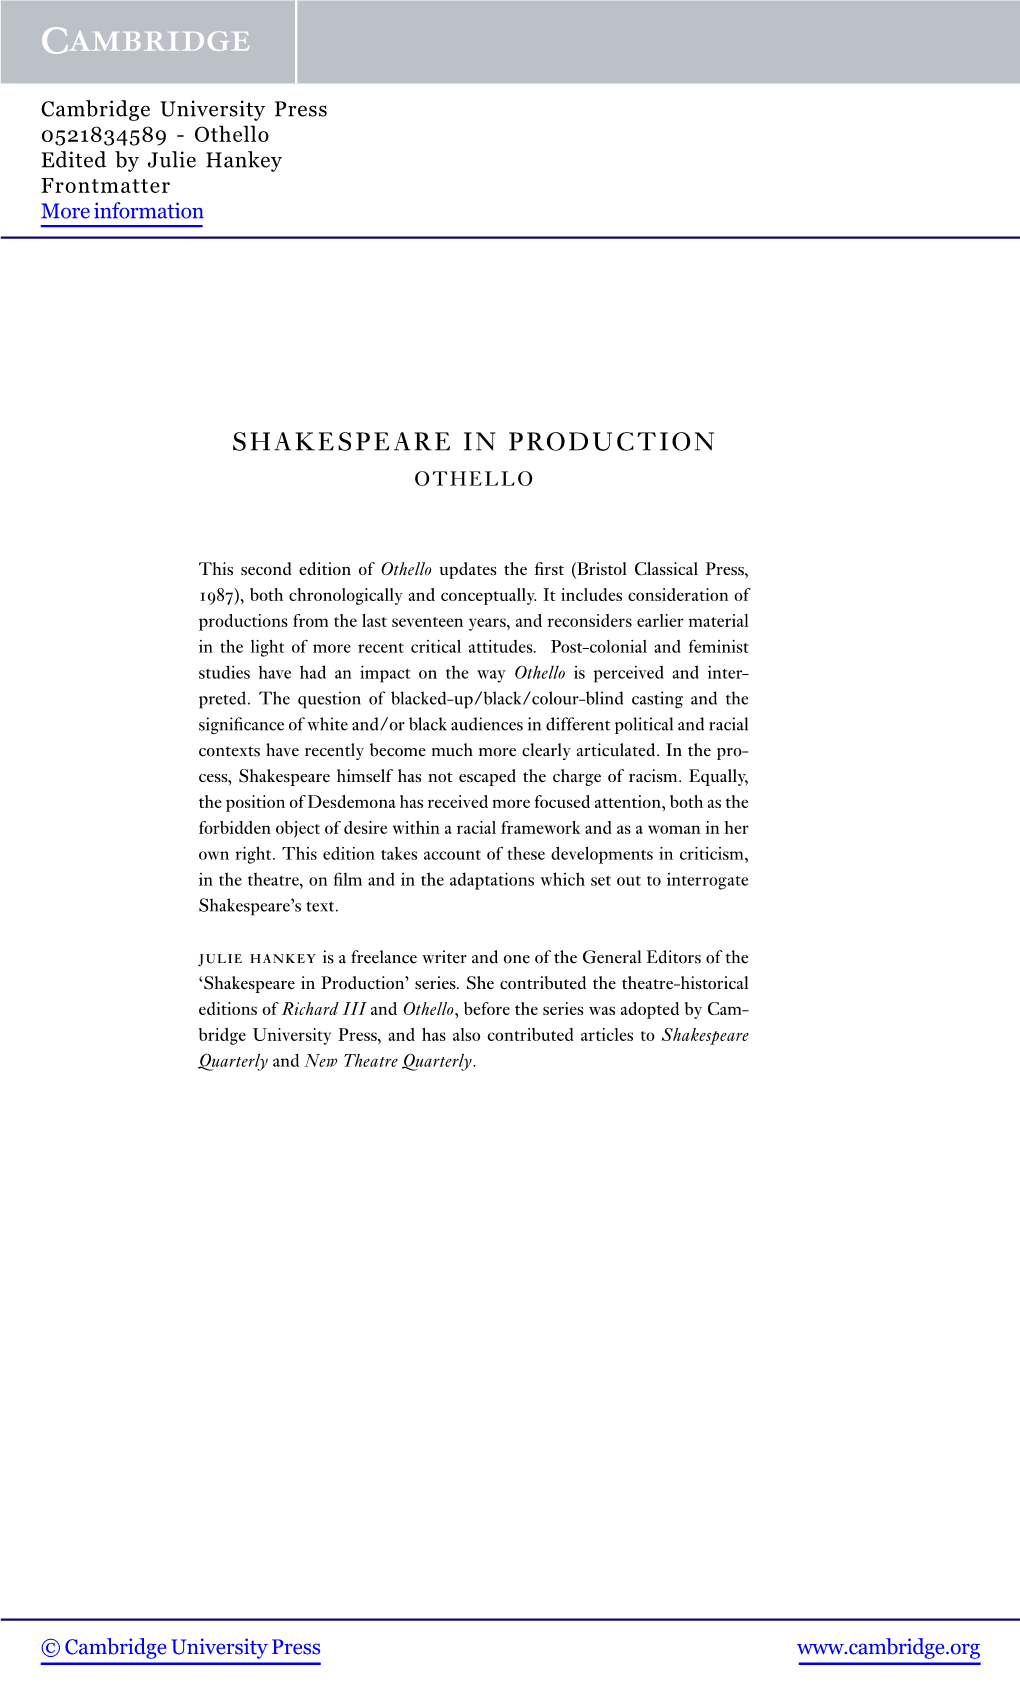 Shakespeare in Production Othello